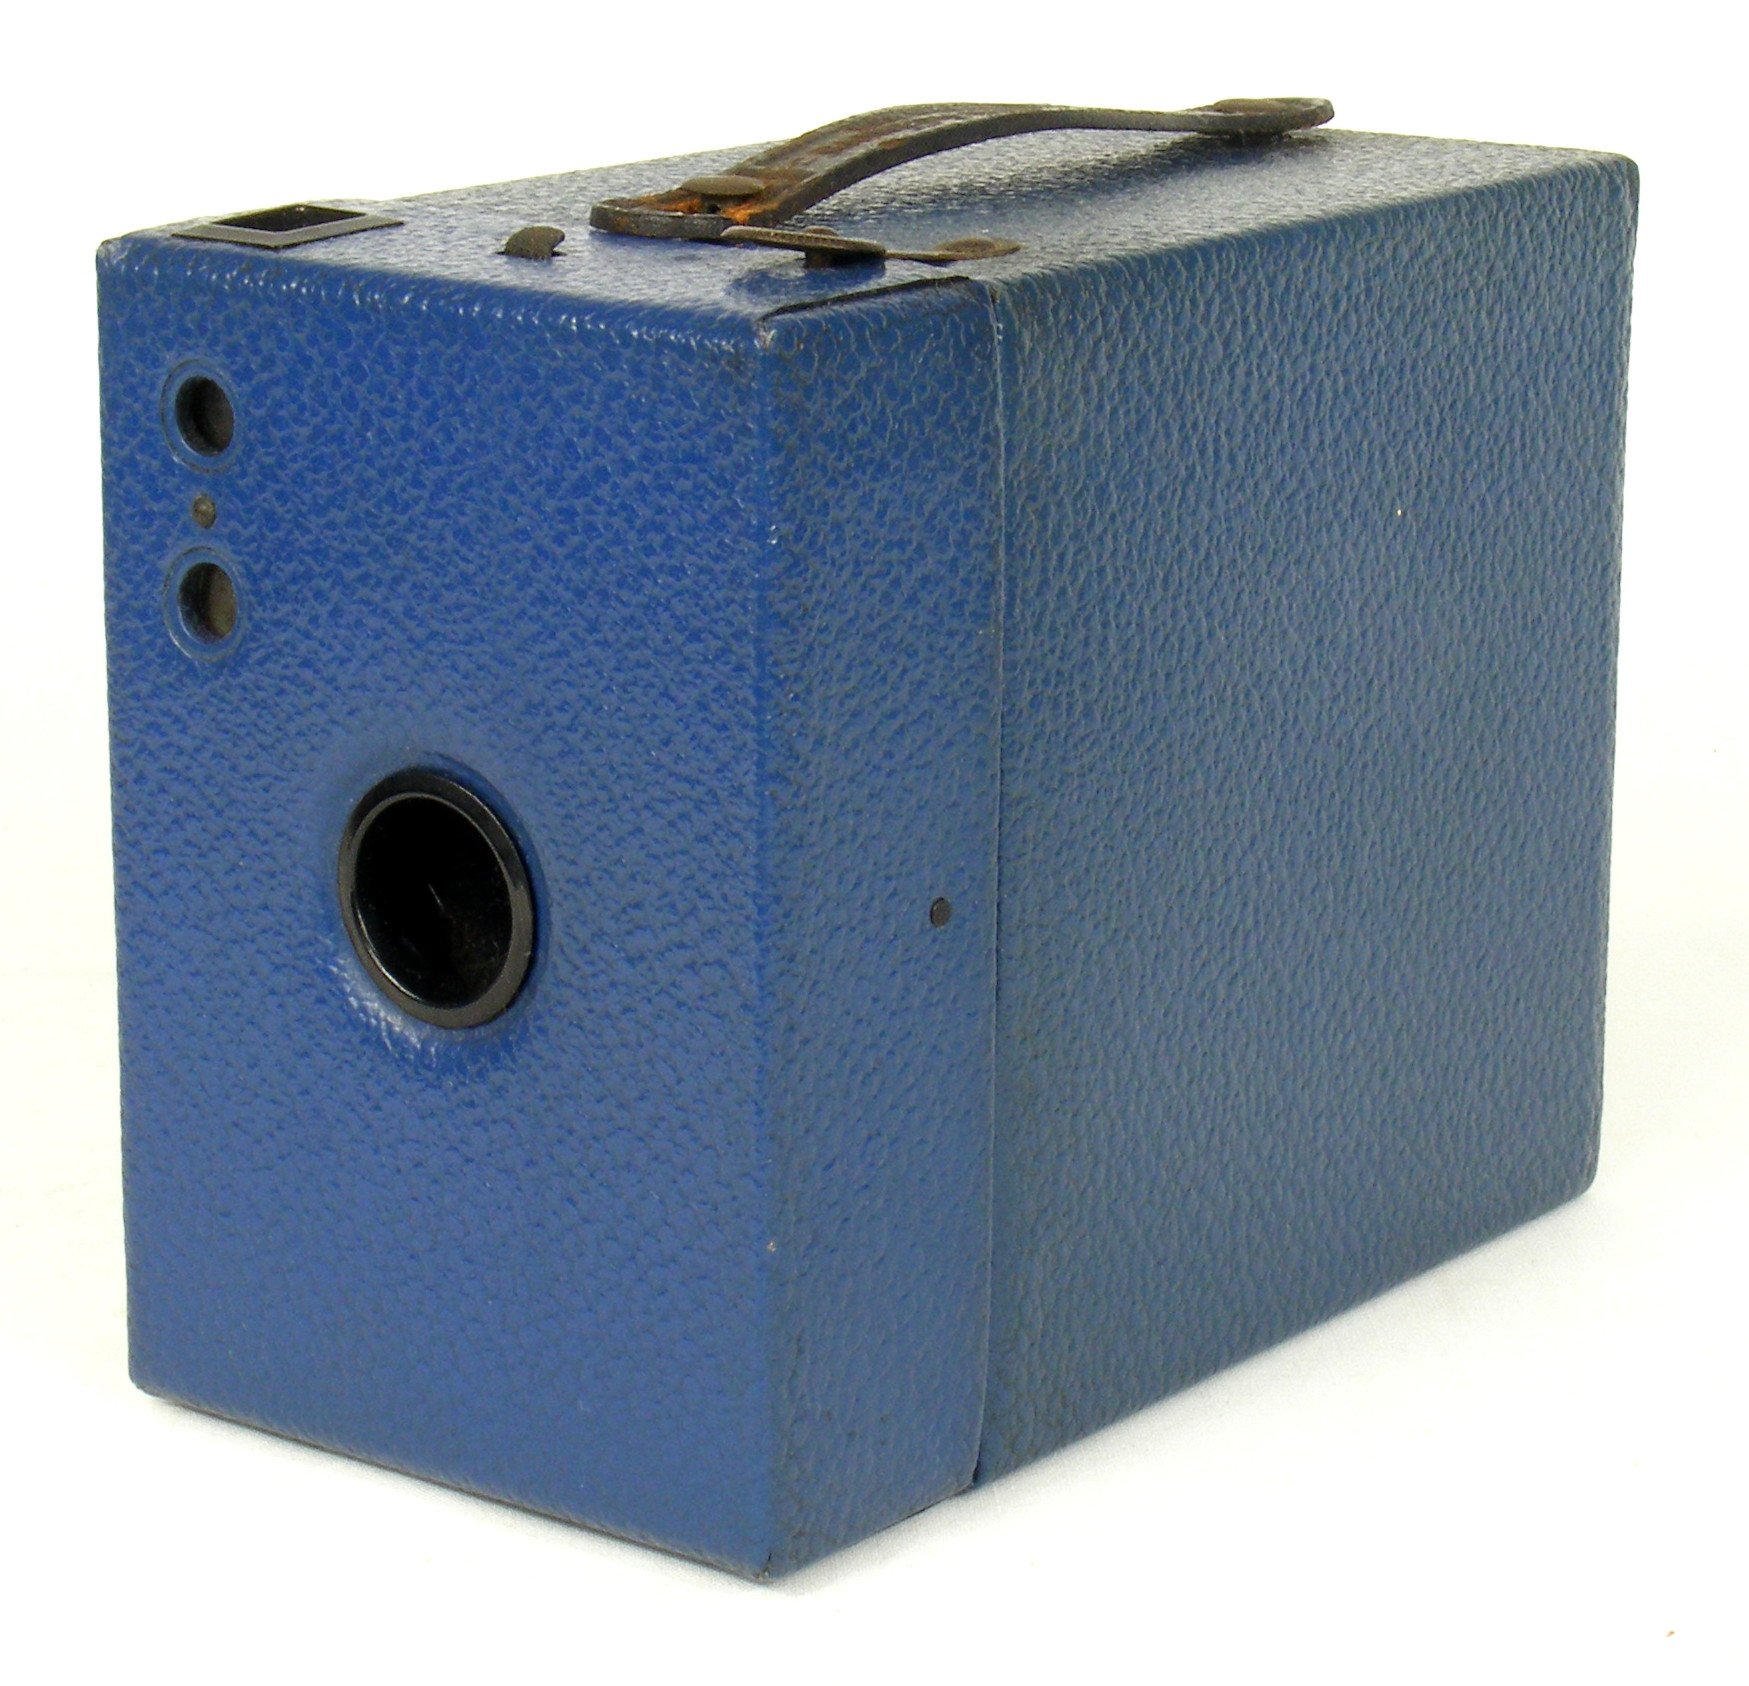 Image of Rainbow Hawk-Eye No 2 box camera (UK model)